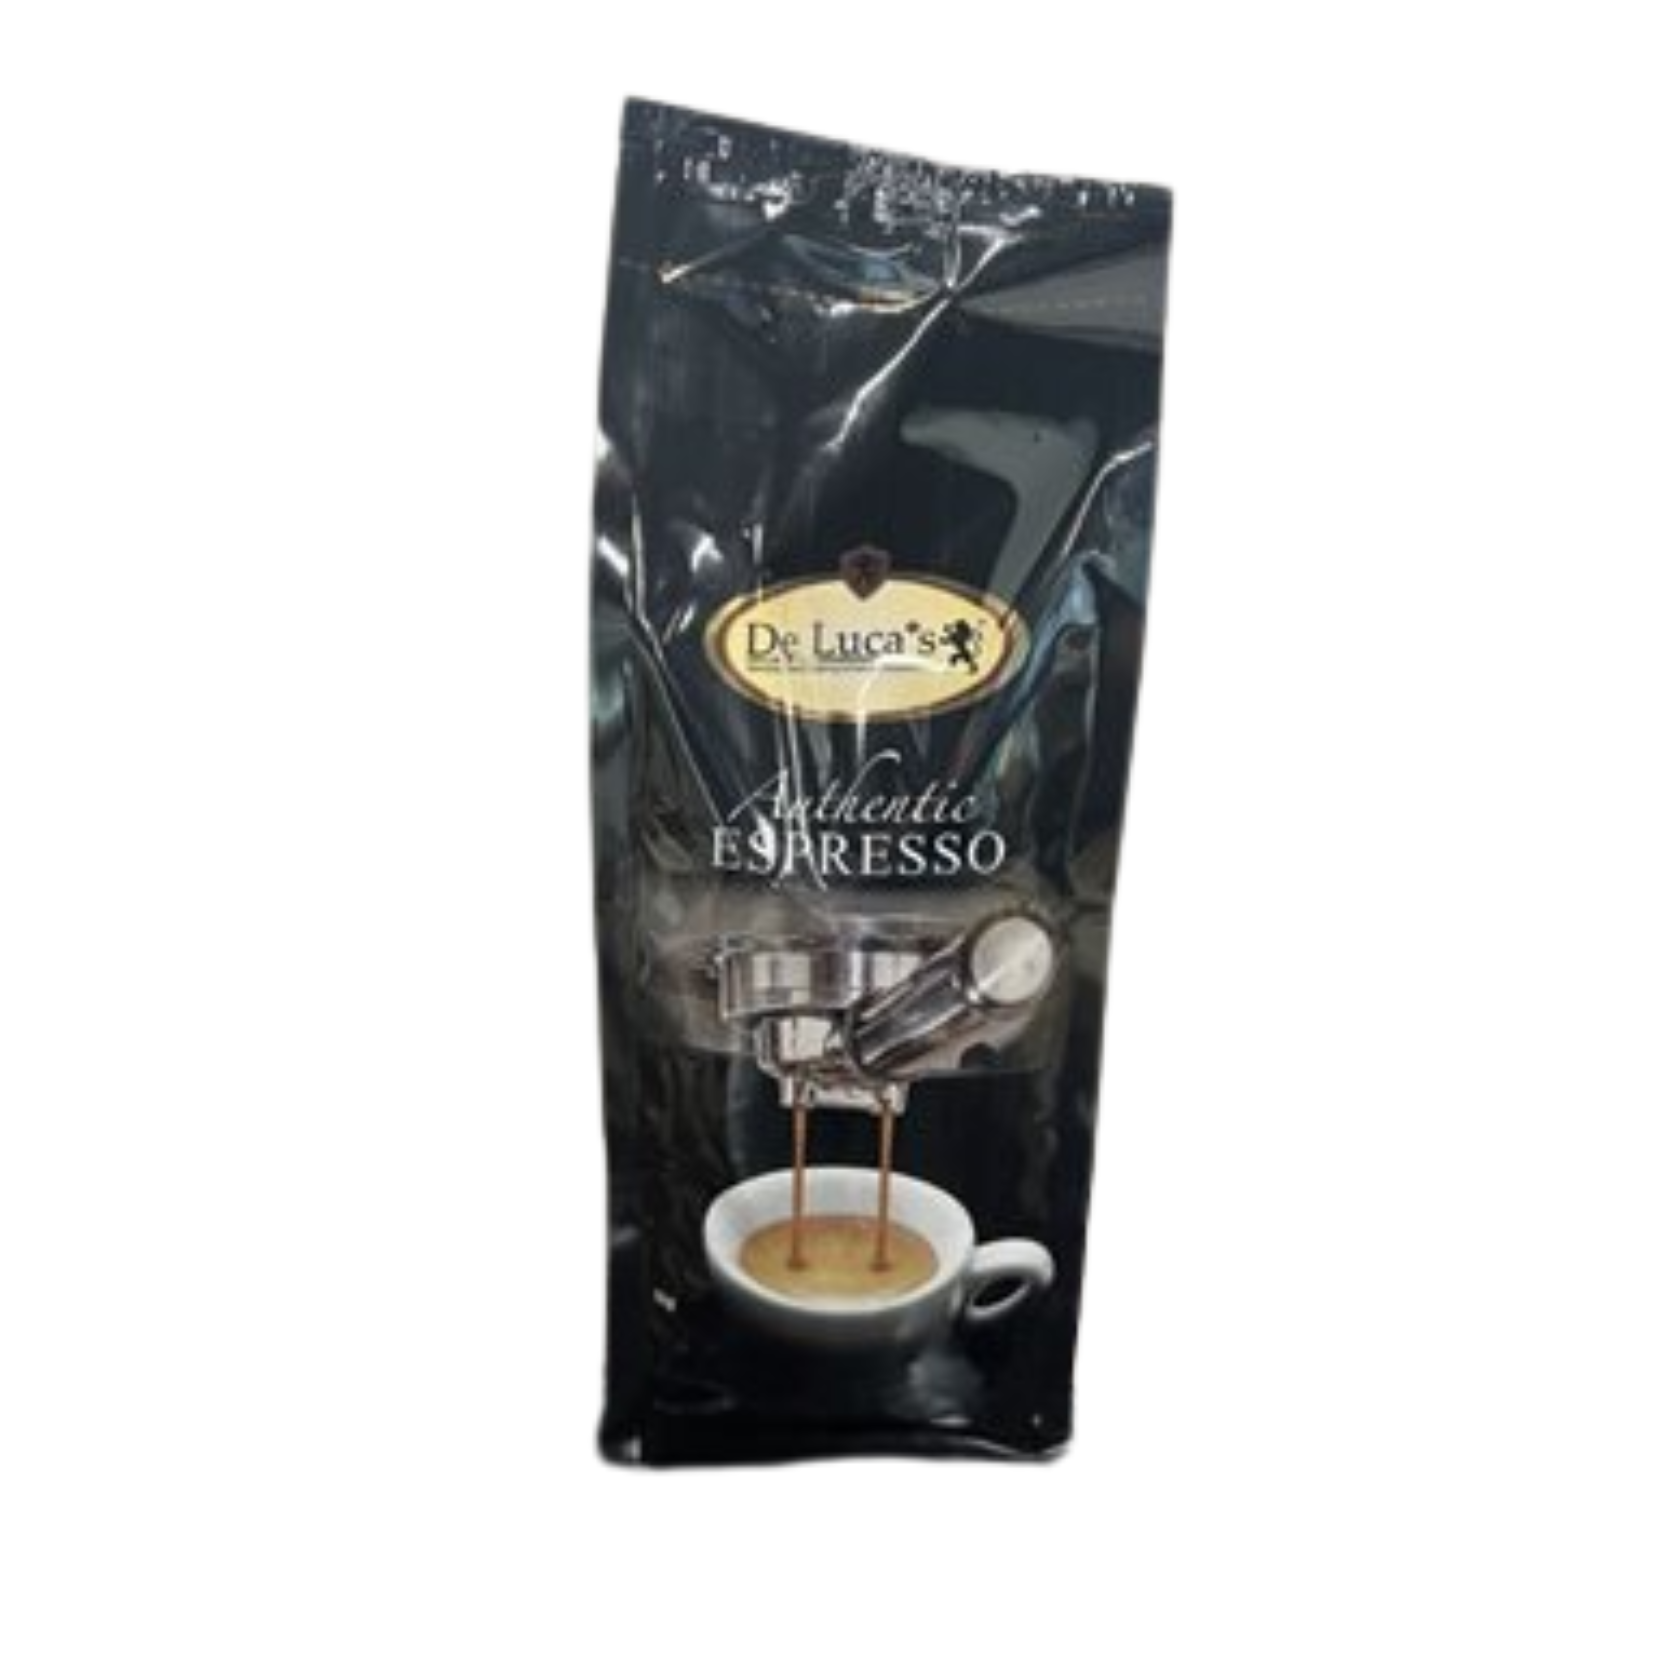 Deluca's Authentique Espresso Beans 1kg